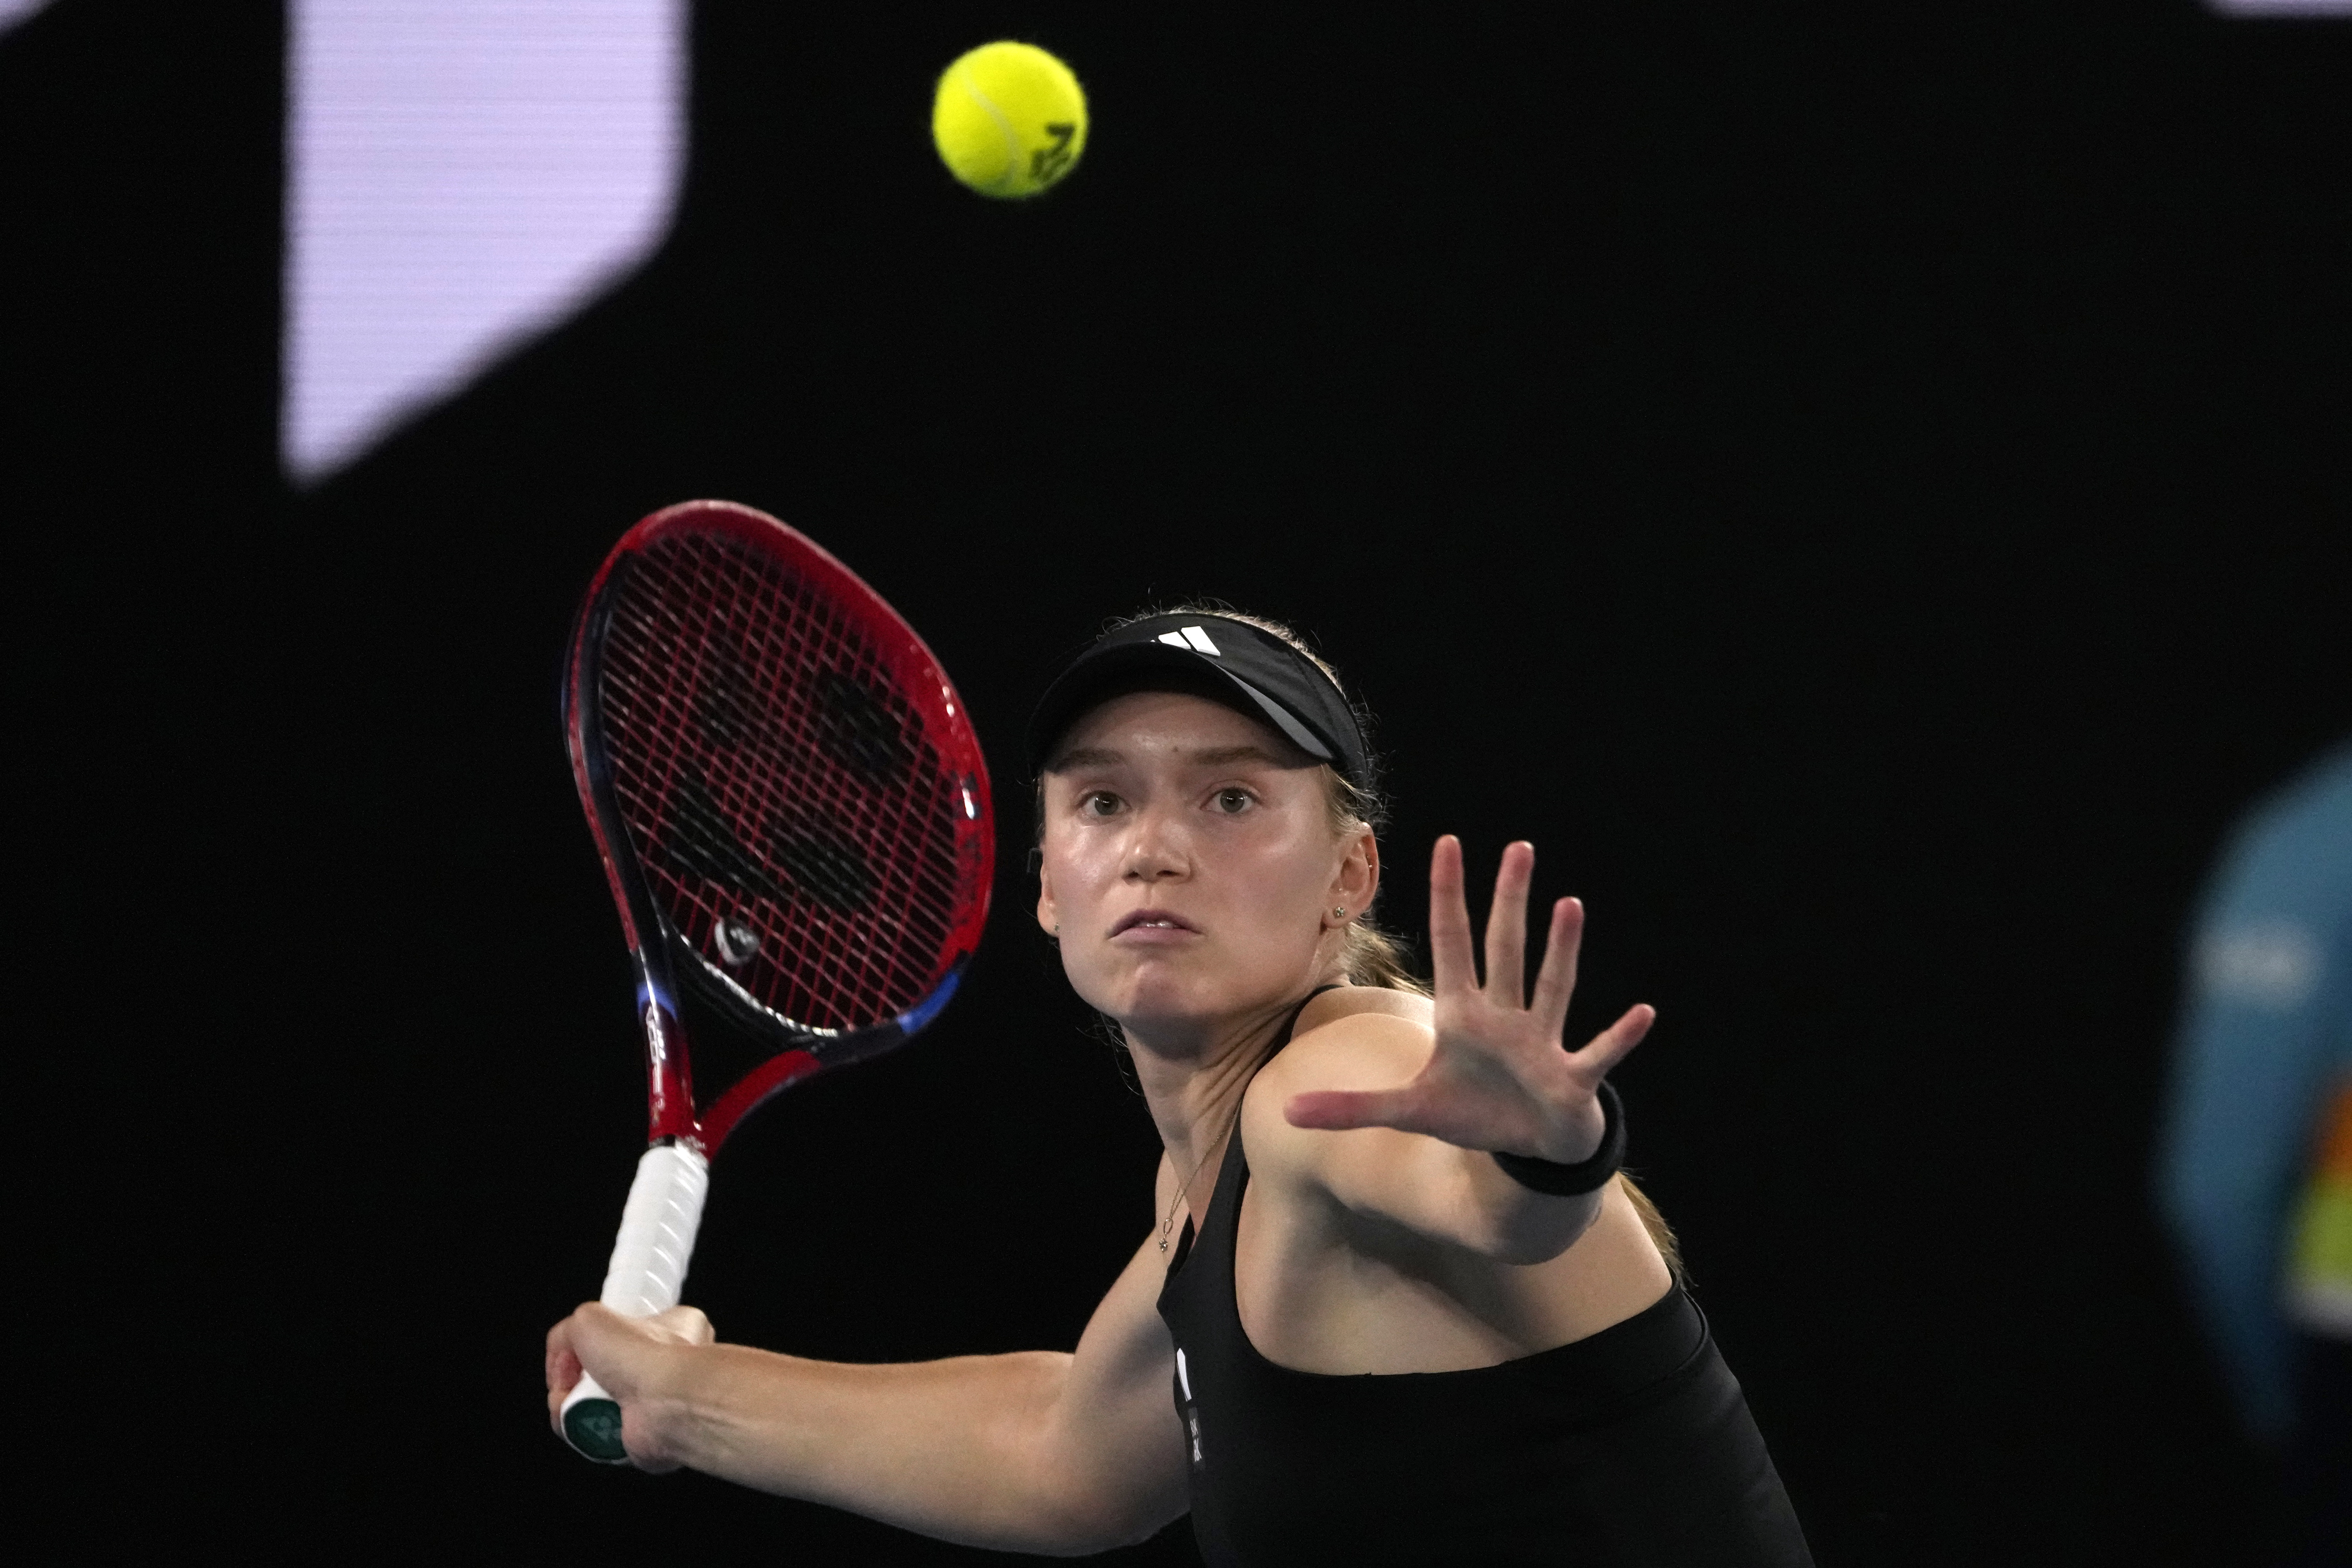 How to Watch the Australian Open Womens Final - Rybakina vs